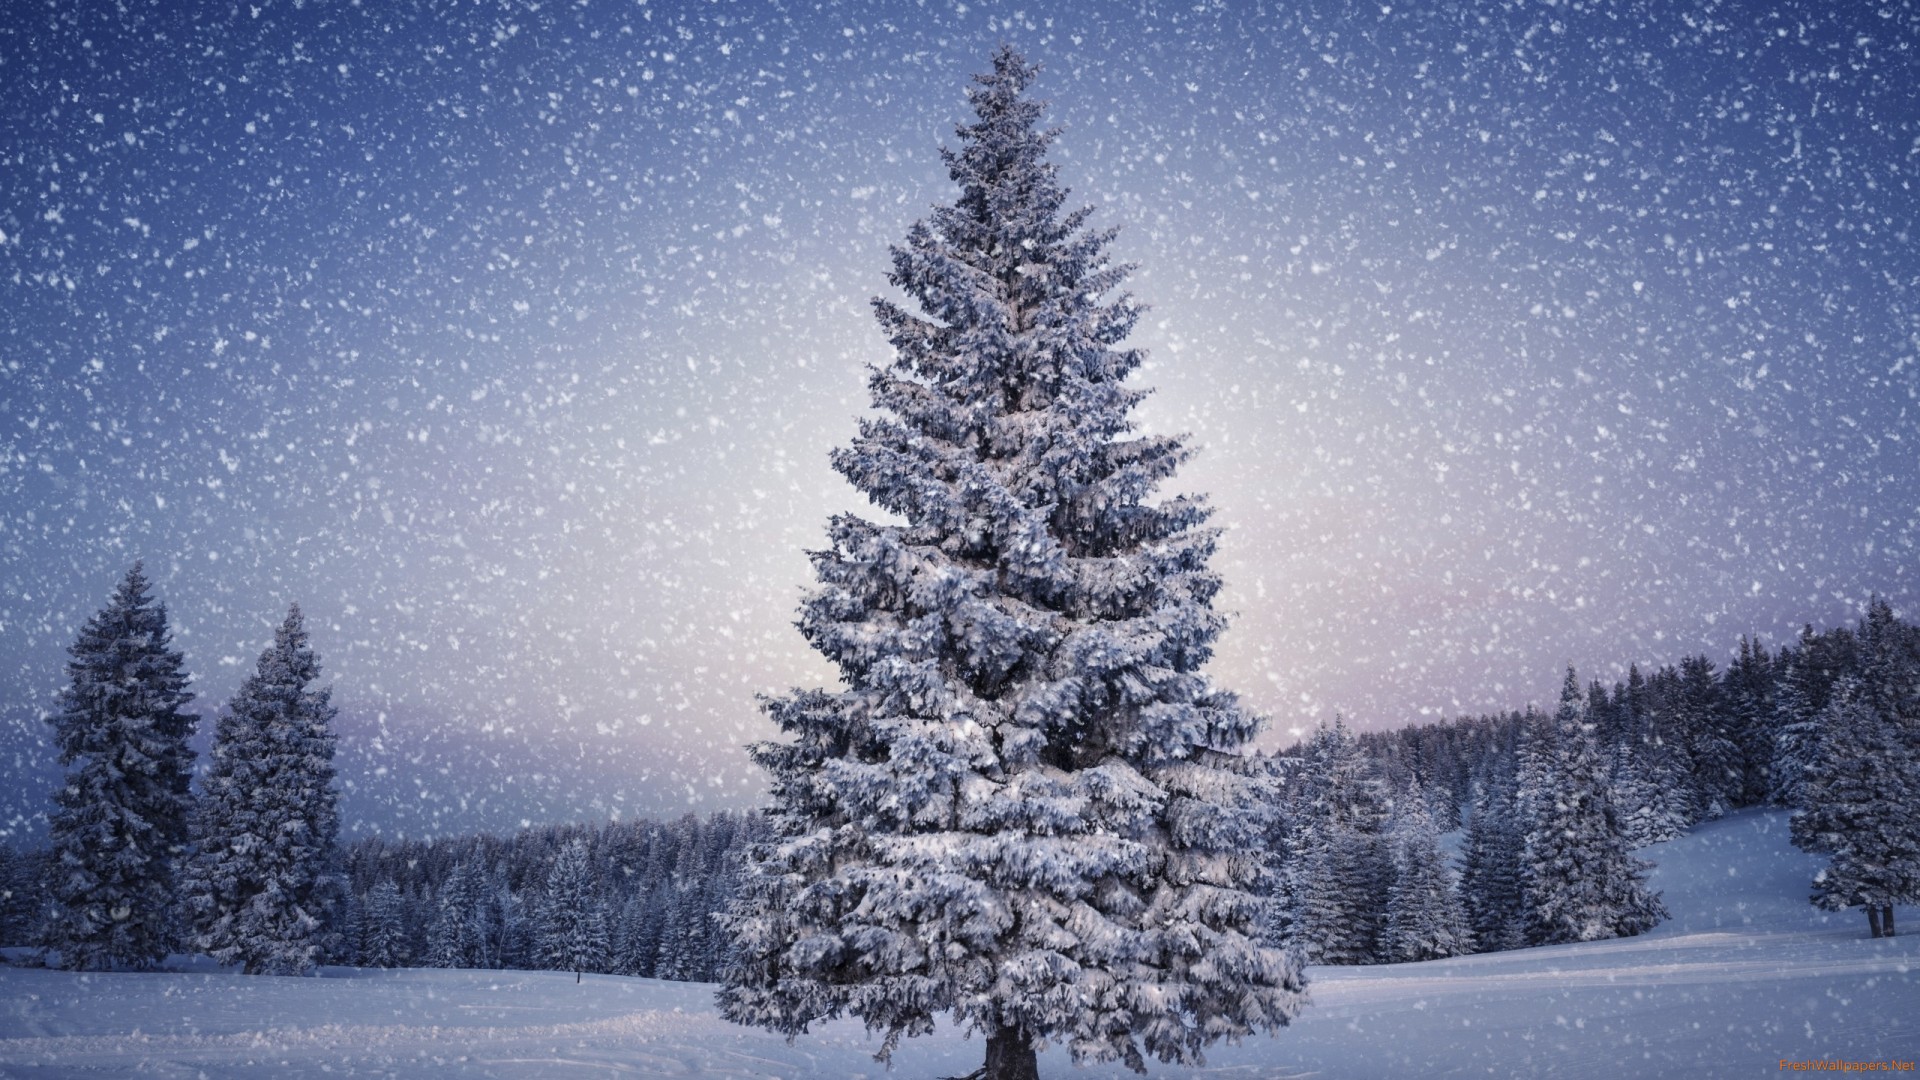 Snowy Christmas Tree Wallpaper Freshwallpaper